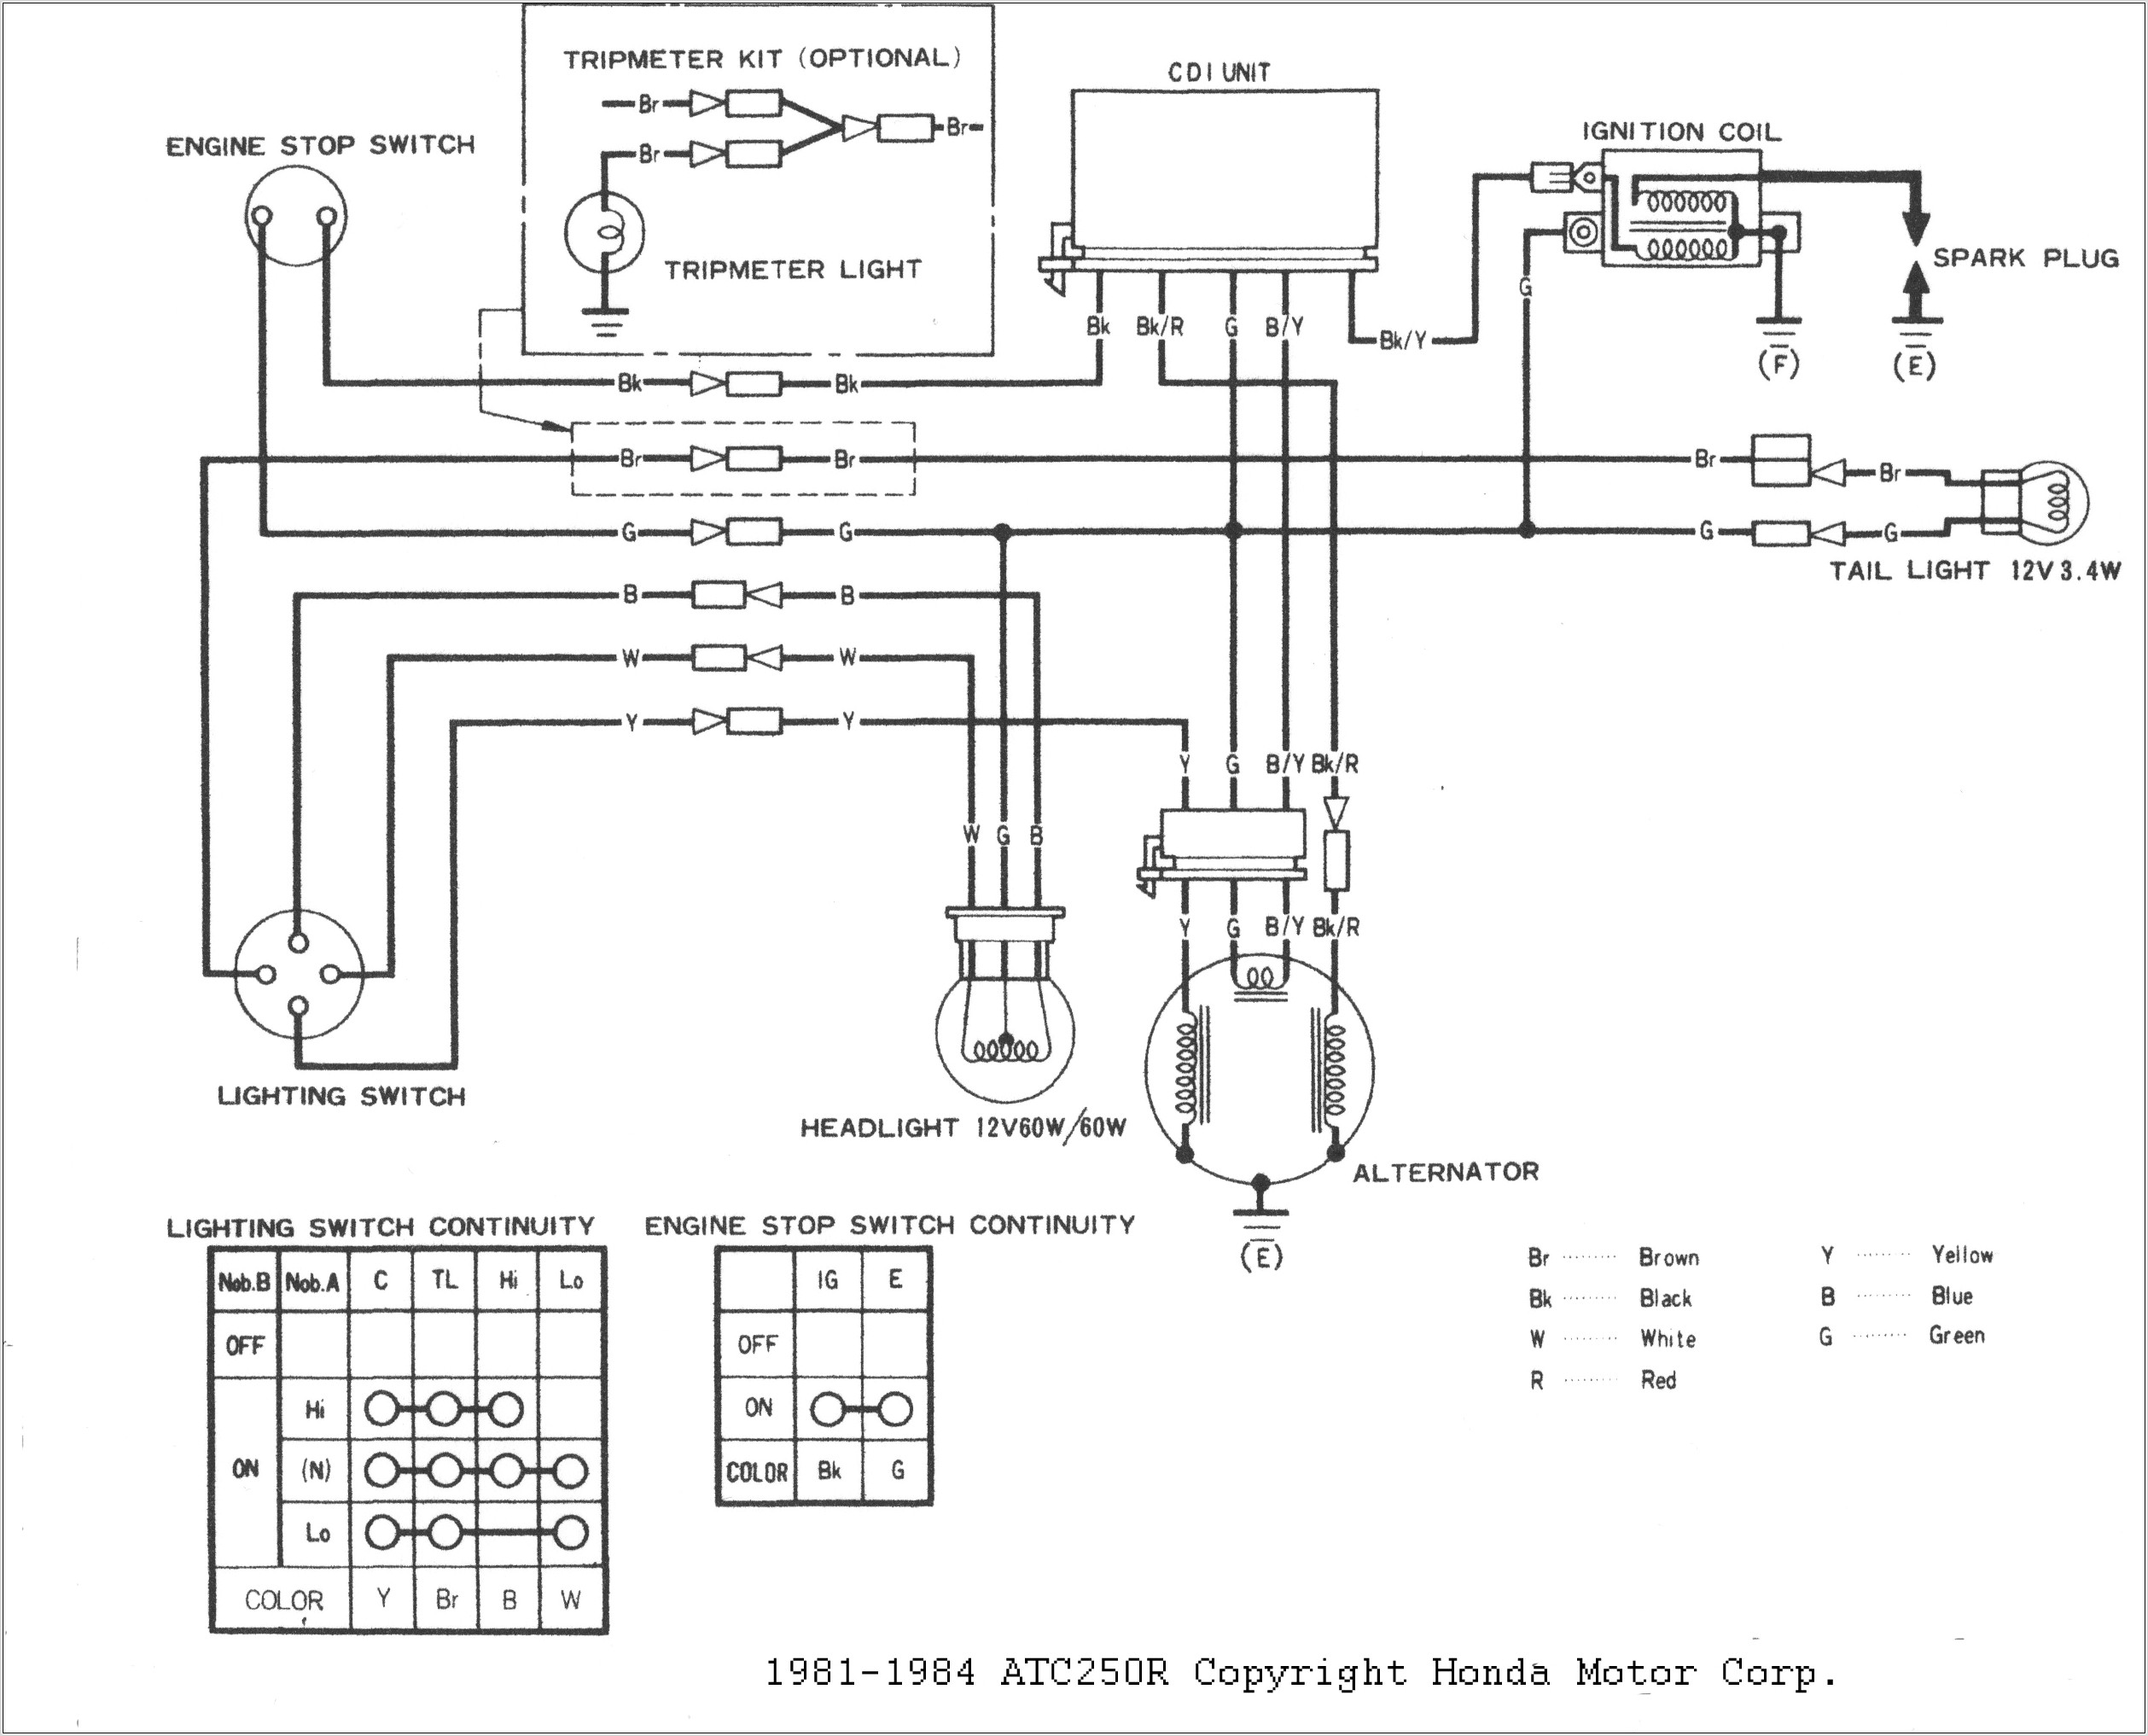 1985 Honda Trx 250 Wiring Diagram